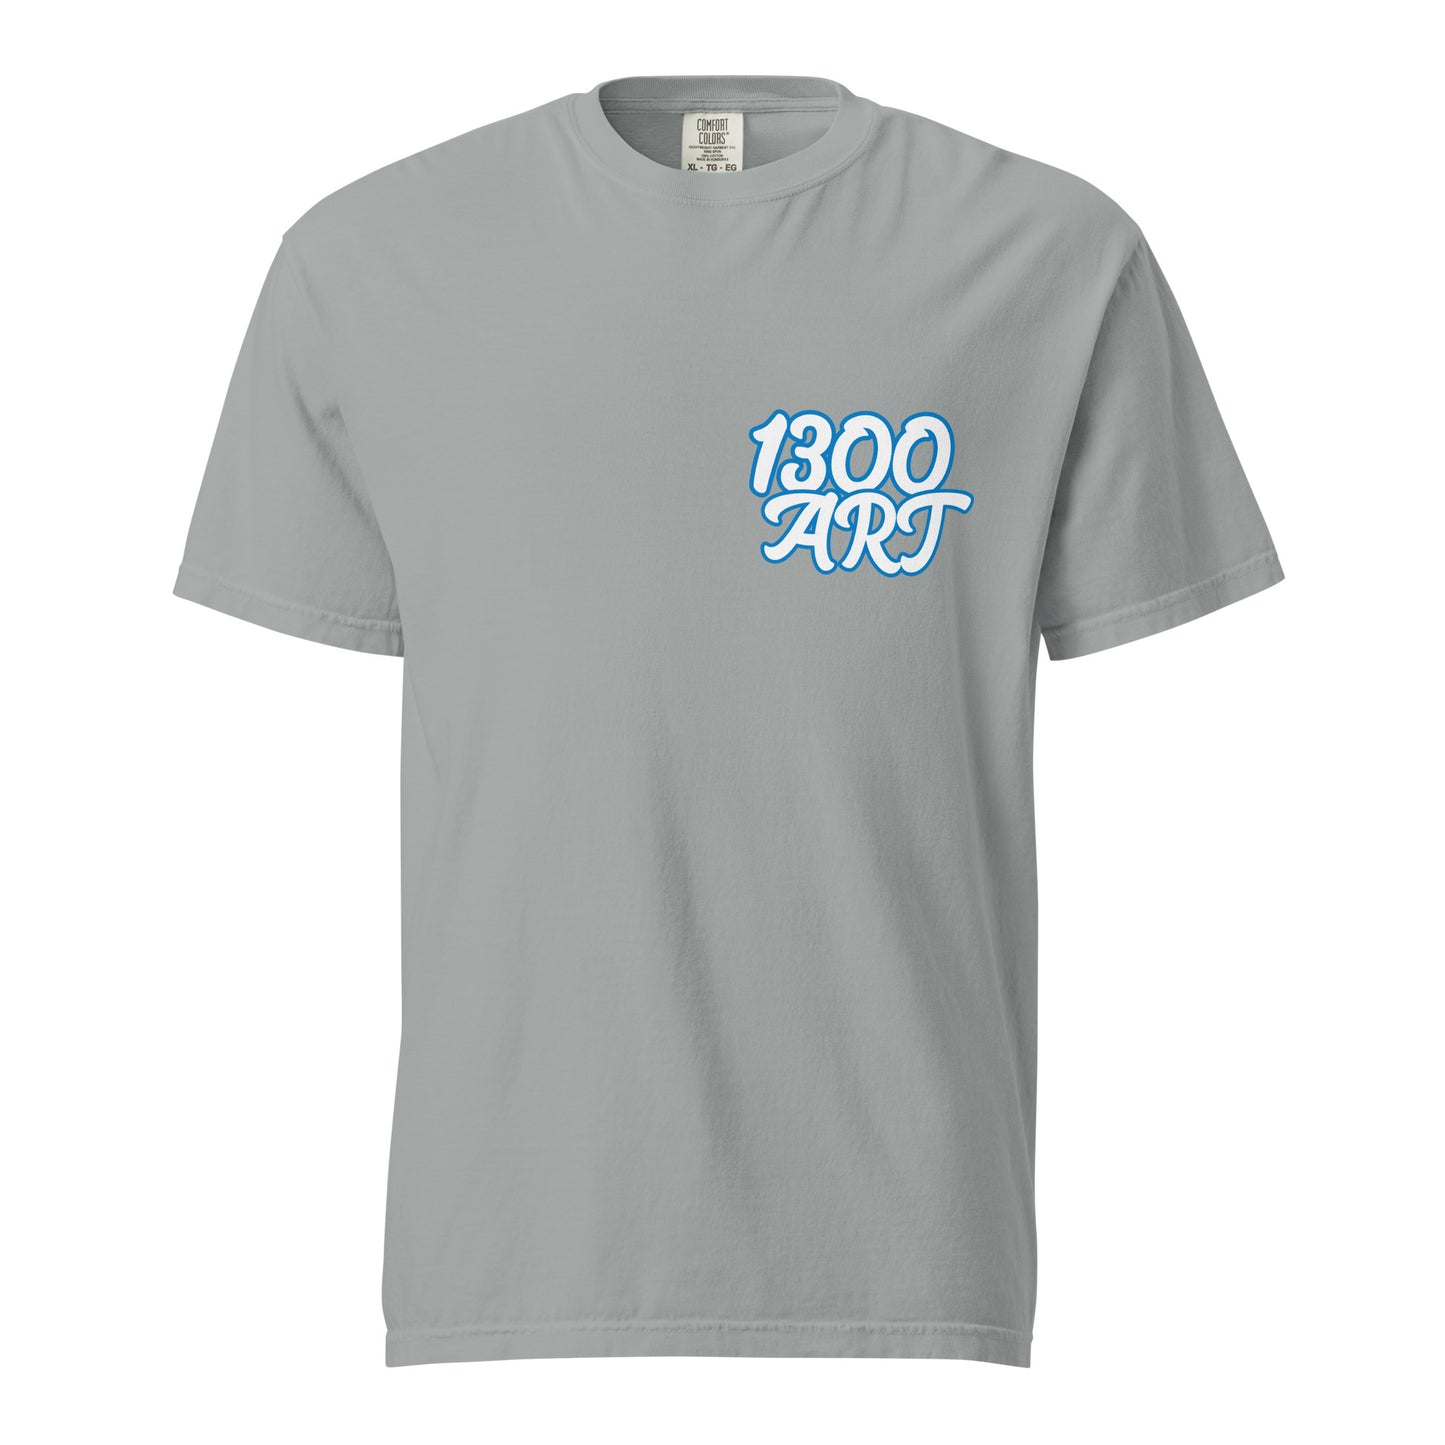 "1300 Ways to get paid" Unisex heavyweight t-shirt